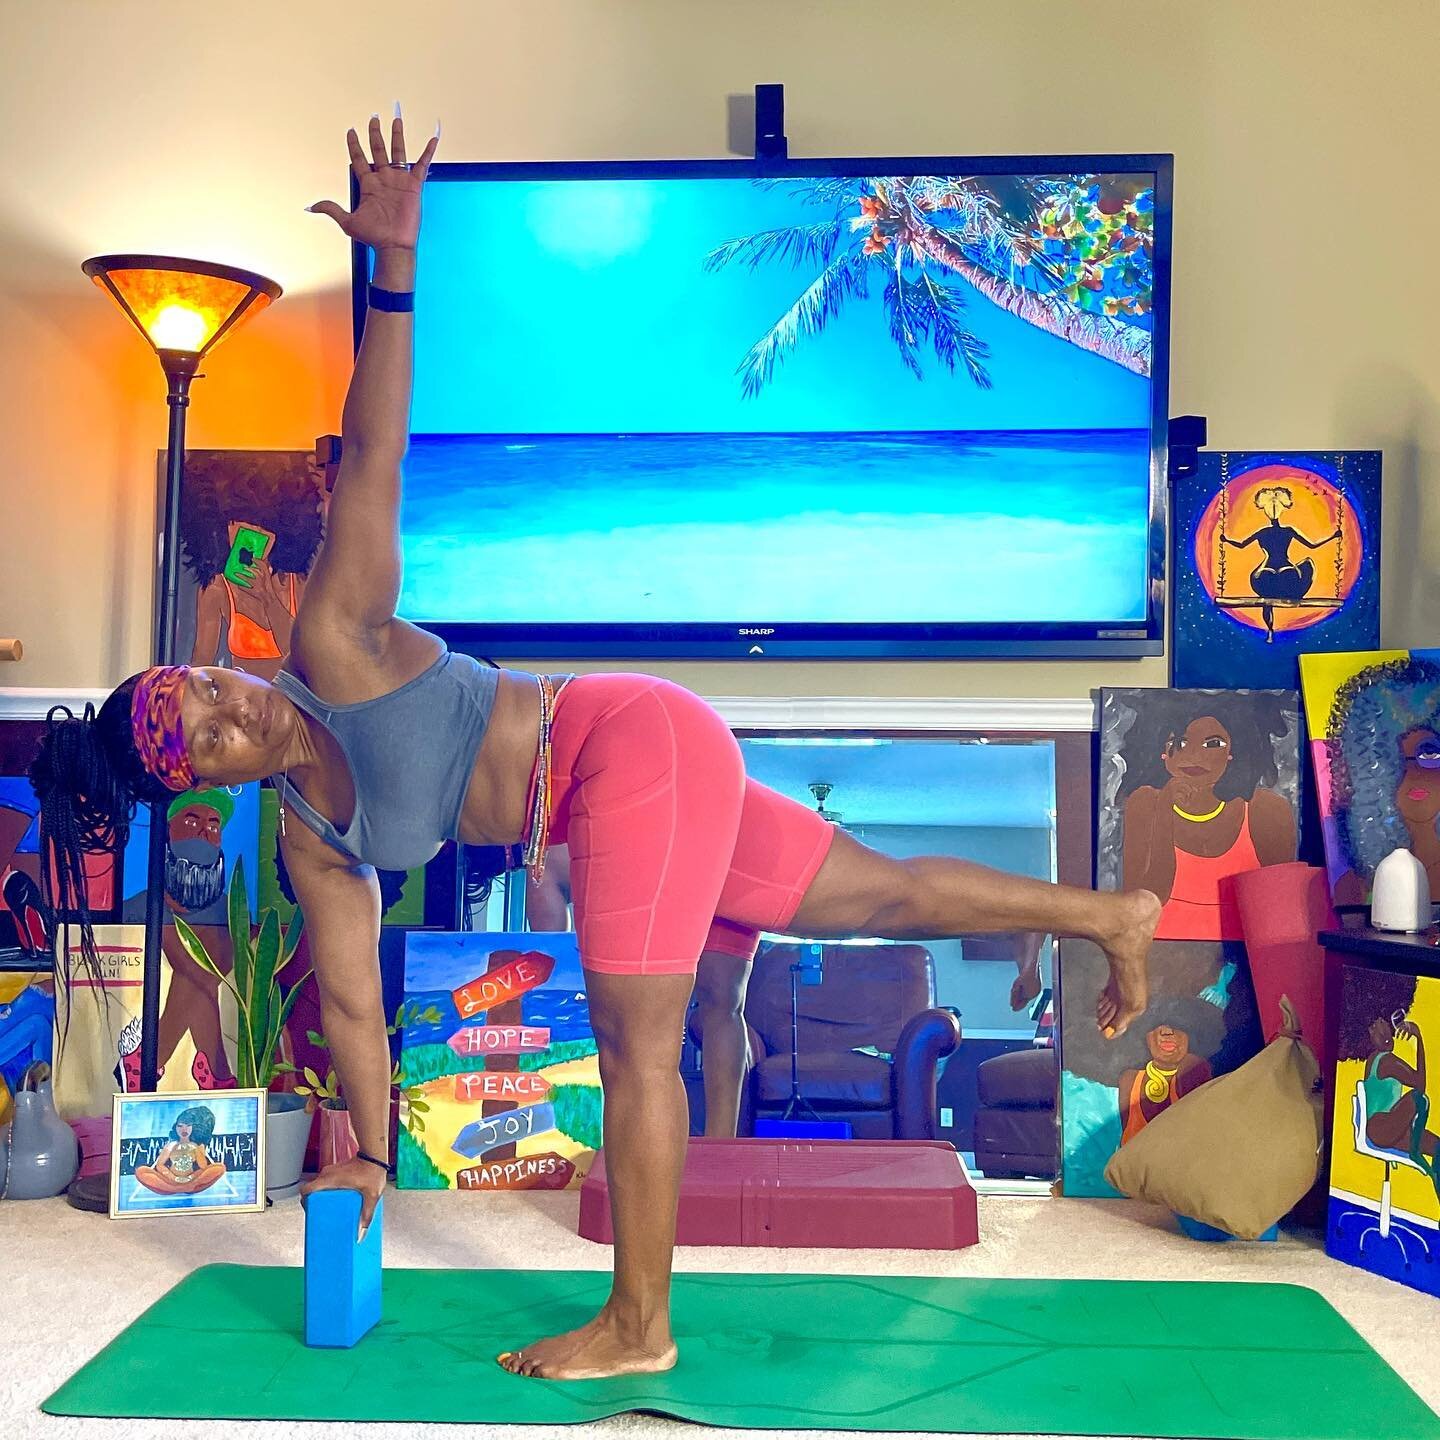 Day 17 Balance pose - #revolvedhalfmoon #dorkchallenge with @ladydork 

#yogalovers #yogaworld #blackgirlyoga #dorkflow #yogaeverydamnday #yogainspiration #yogi #blackwomendoyoga #practiceandalliscoming #igyogachallenge&nbsp;&nbsp;#yoga #igyogachalle